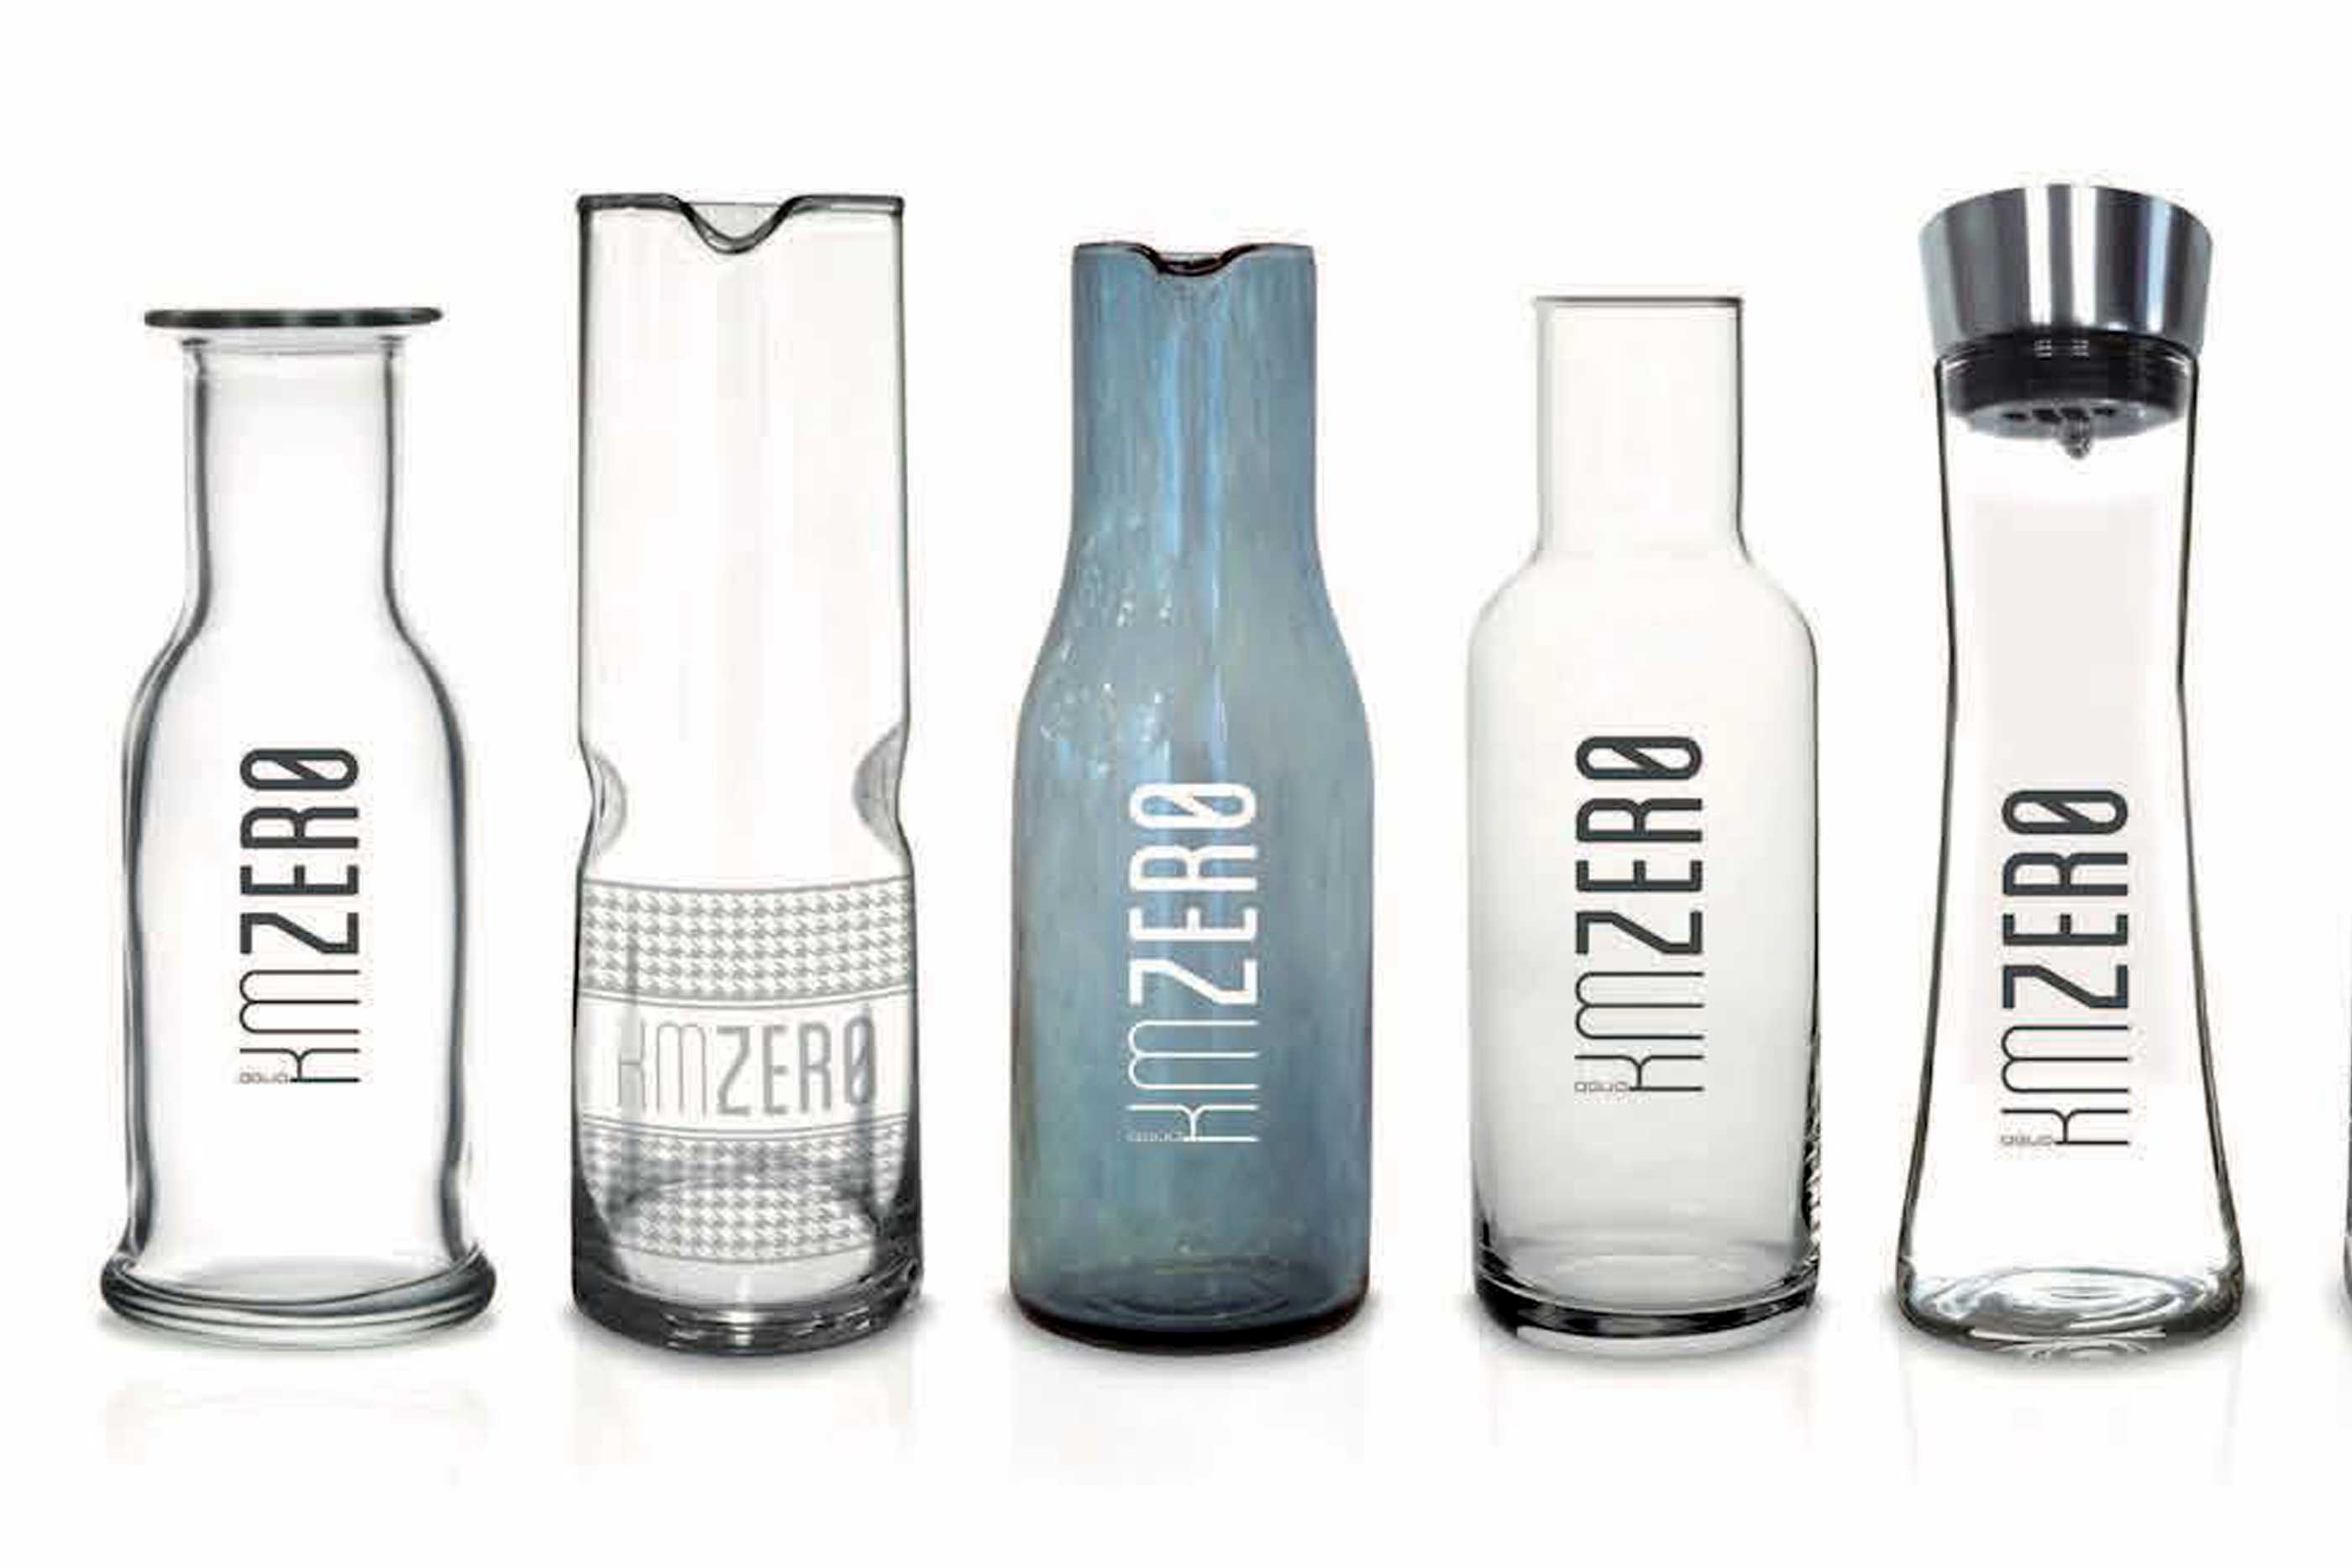 Exemplos de garrafas de água da KMZERO